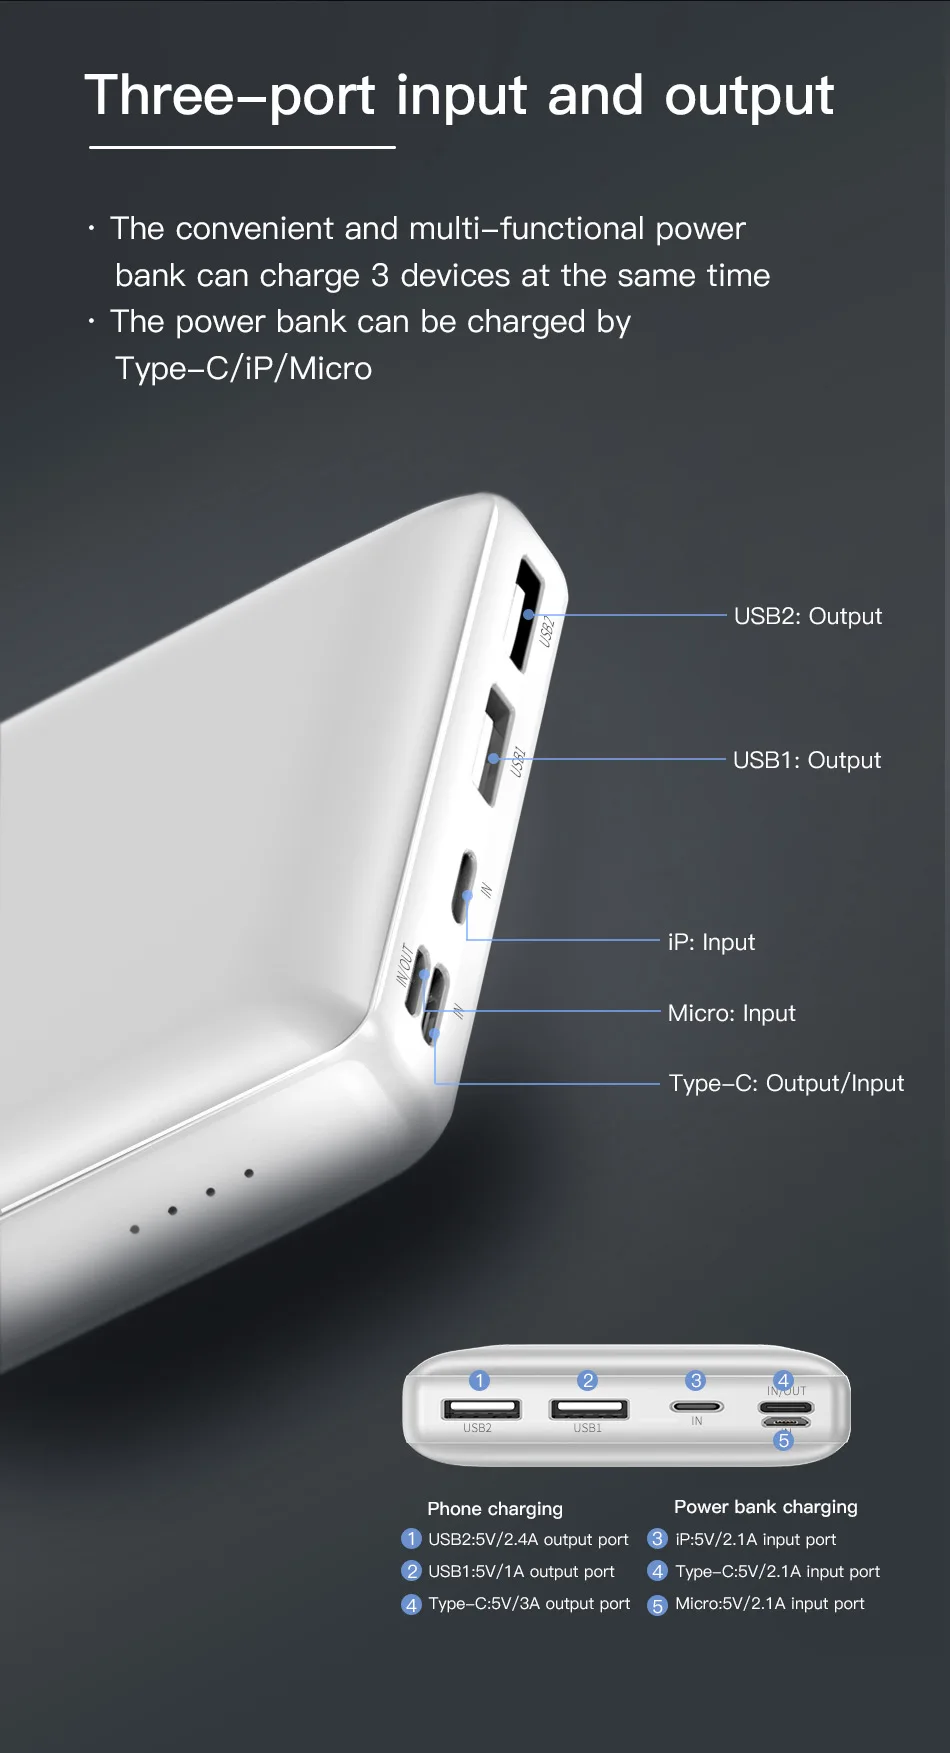 Baseus Power Bank 30000mAh USB C Fast Charging Powerbank Portable External Battery Charger For iPhone 1112 Pro Xiaomi Pover Bank pocket power bank